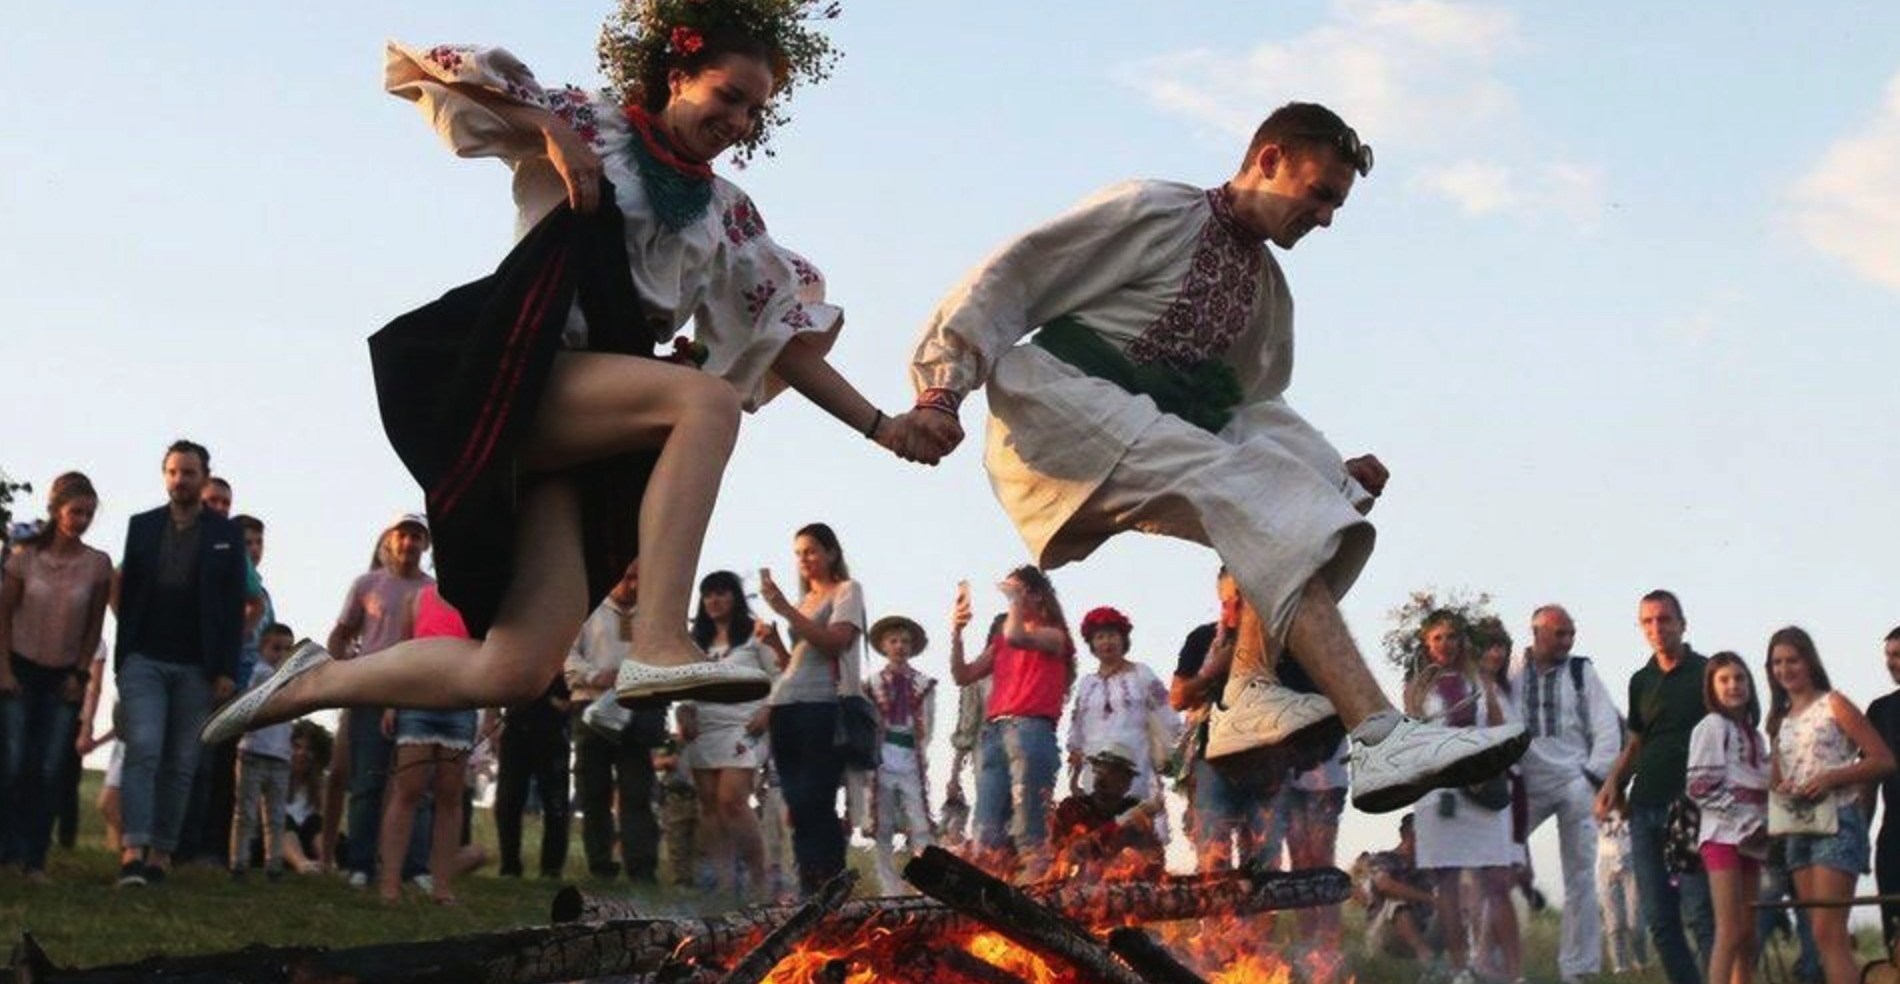 Ukrainian summer festivals: dates and locations